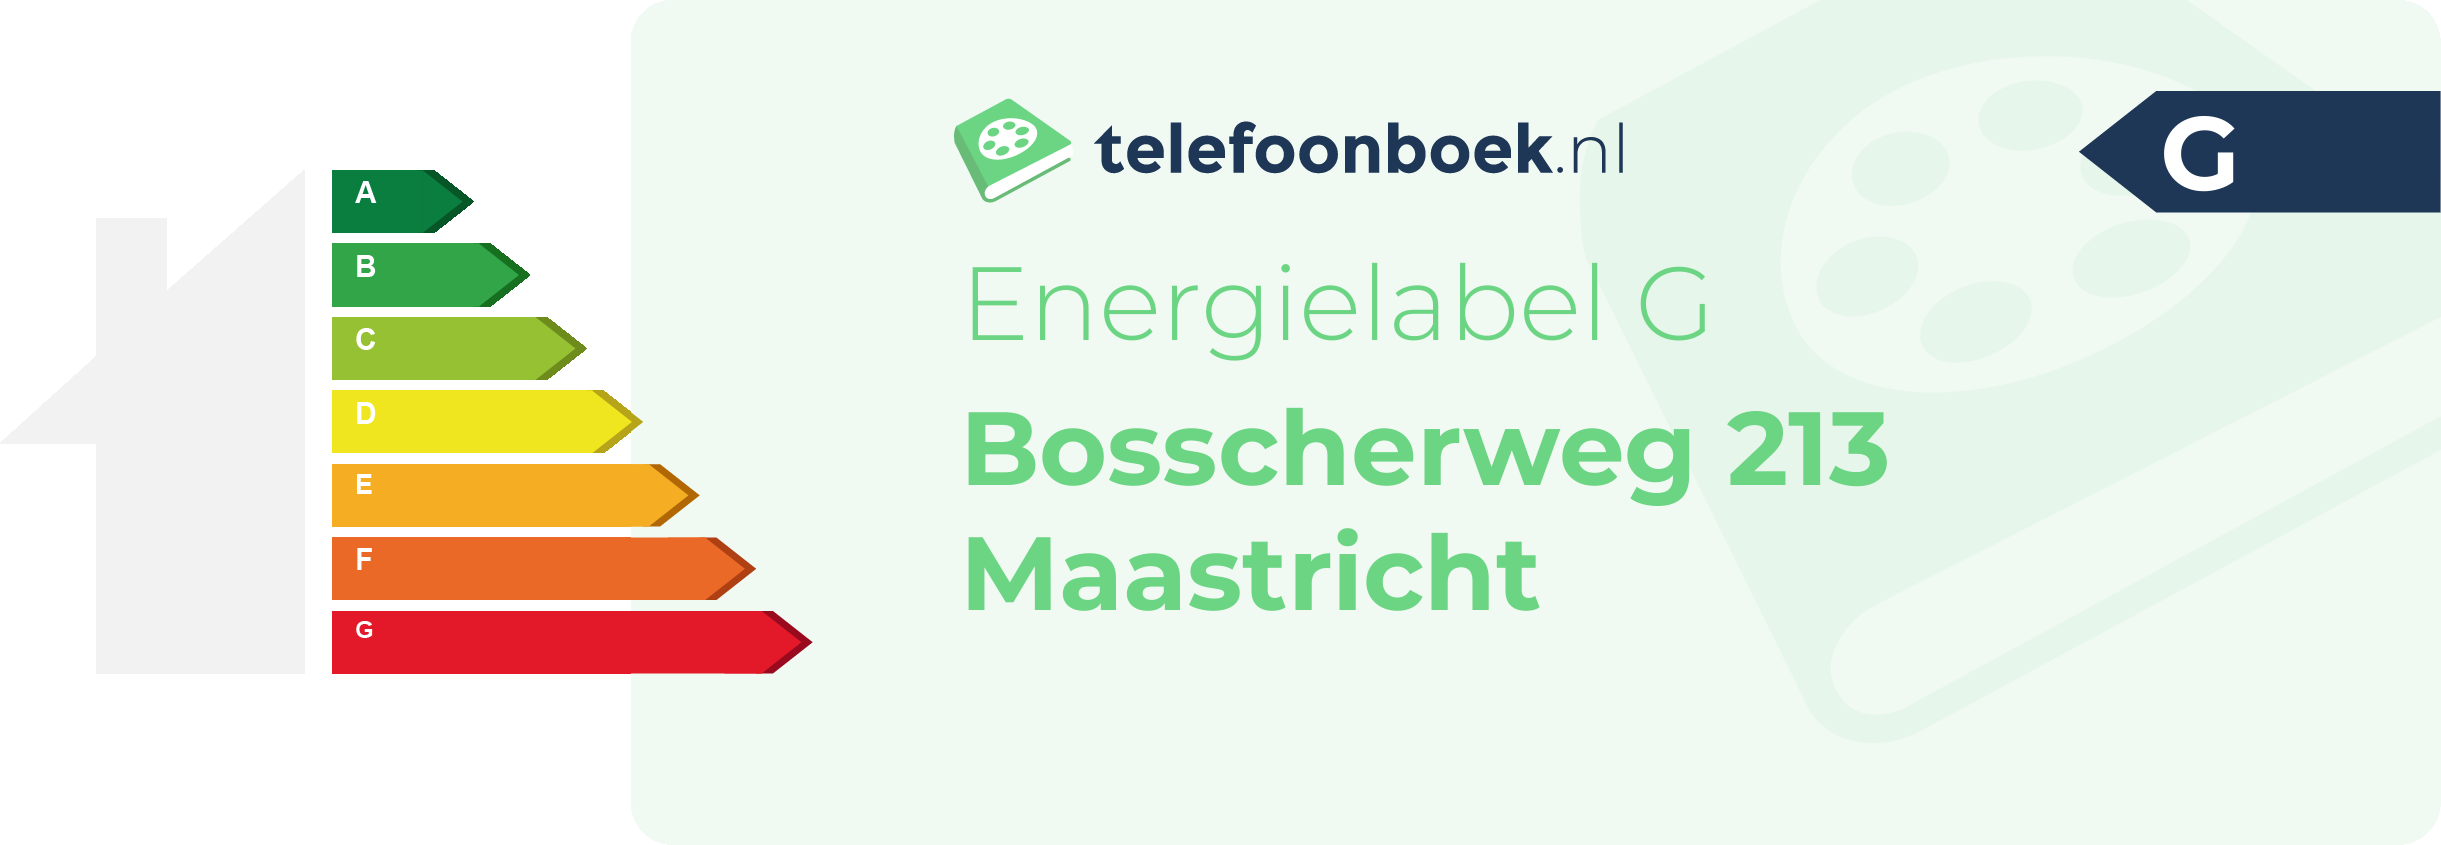 Energielabel Bosscherweg 213 Maastricht